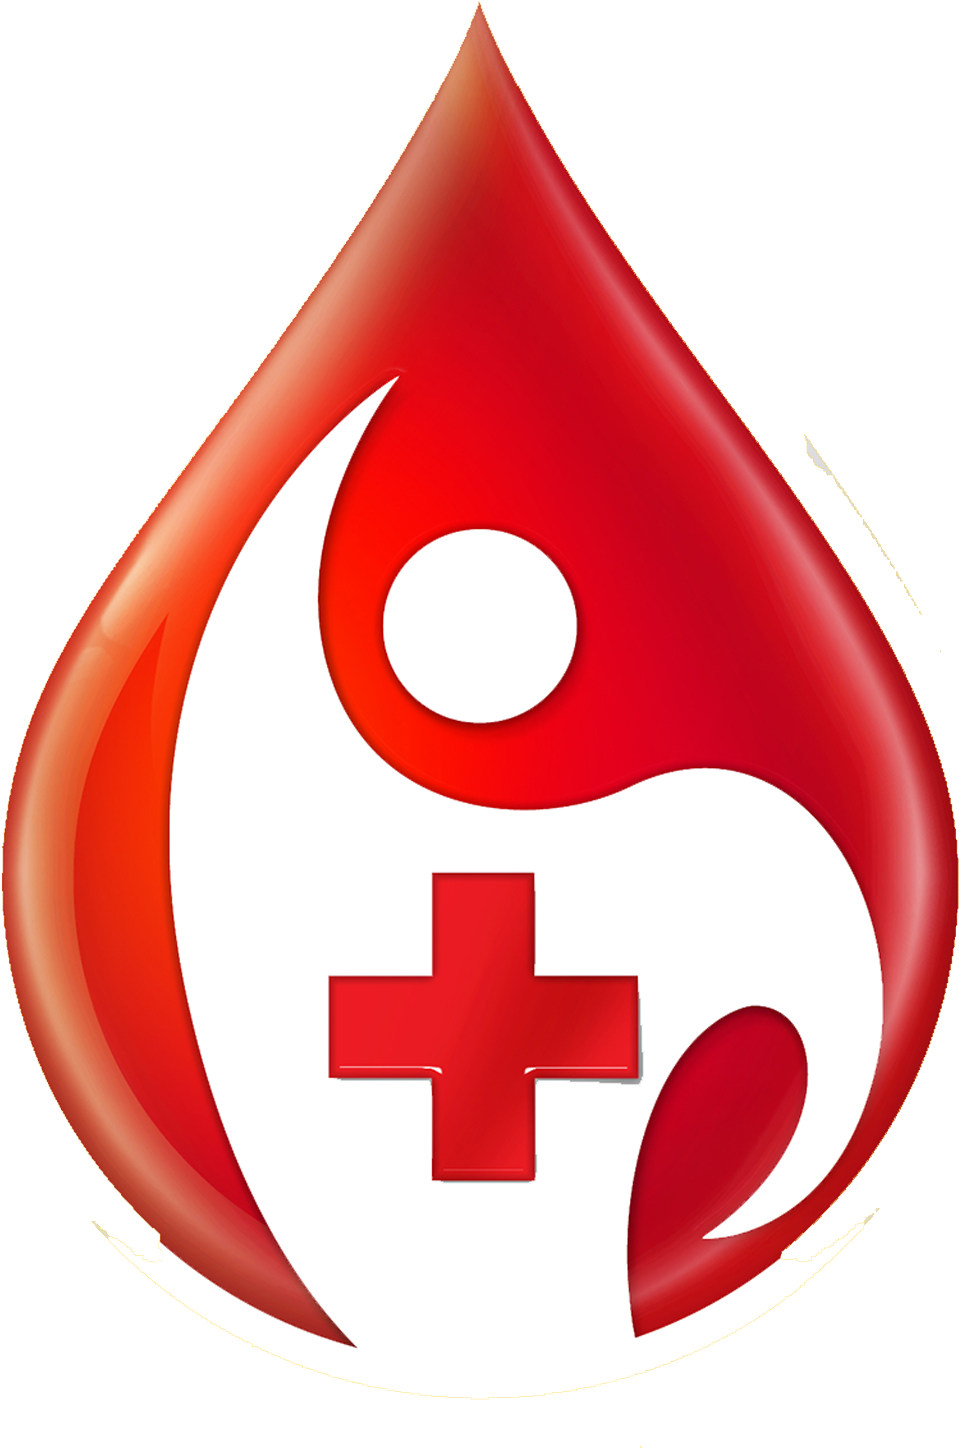 Знаки доноров крови. Капля крови. Знак донора. Донор логотип. Значок донорства крови.